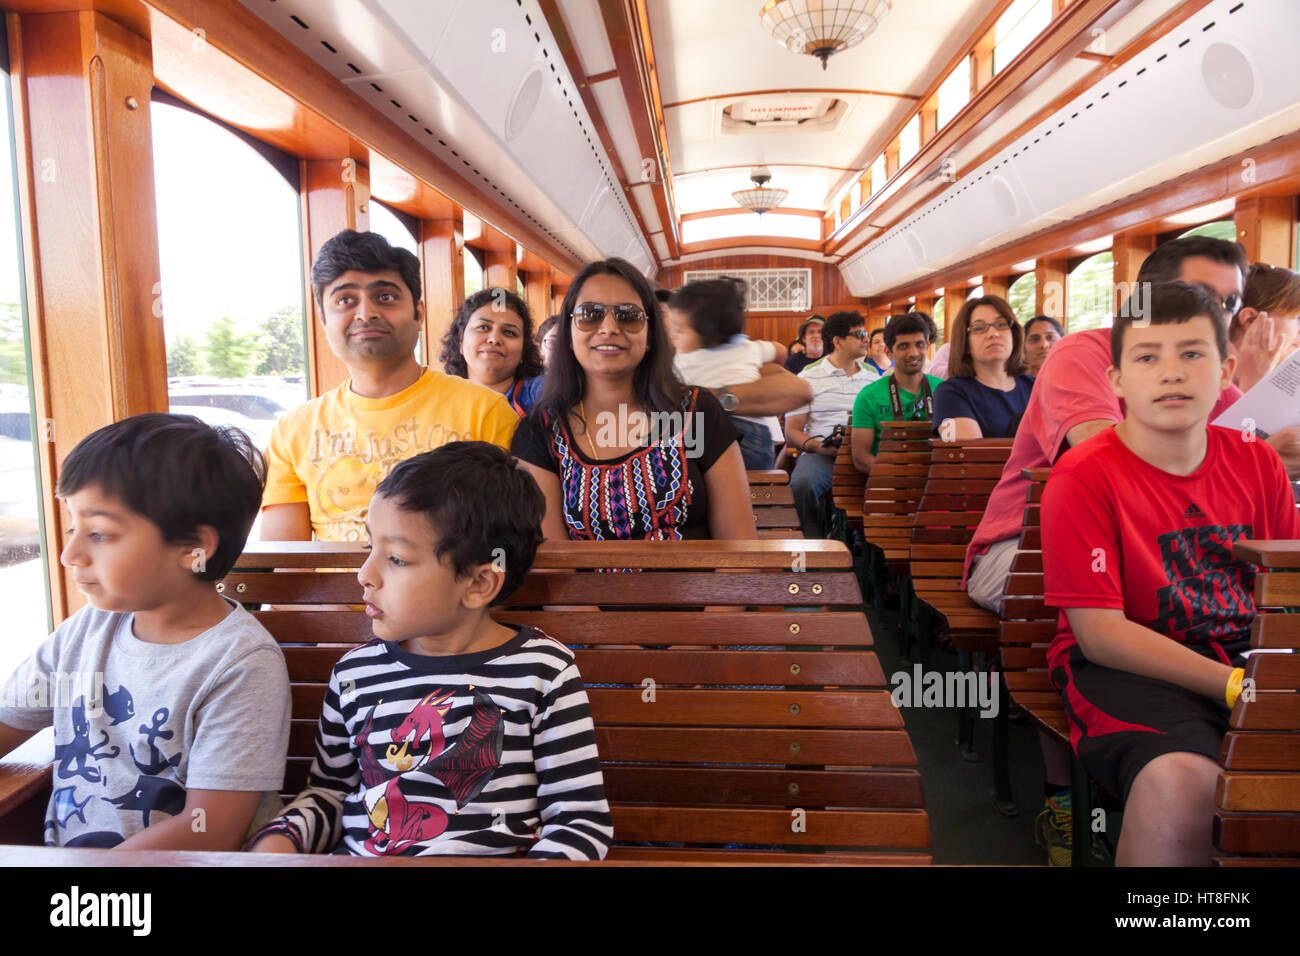 Tourists aboard a Hersheypark, Pennsylvania tour bus. Stock Photo